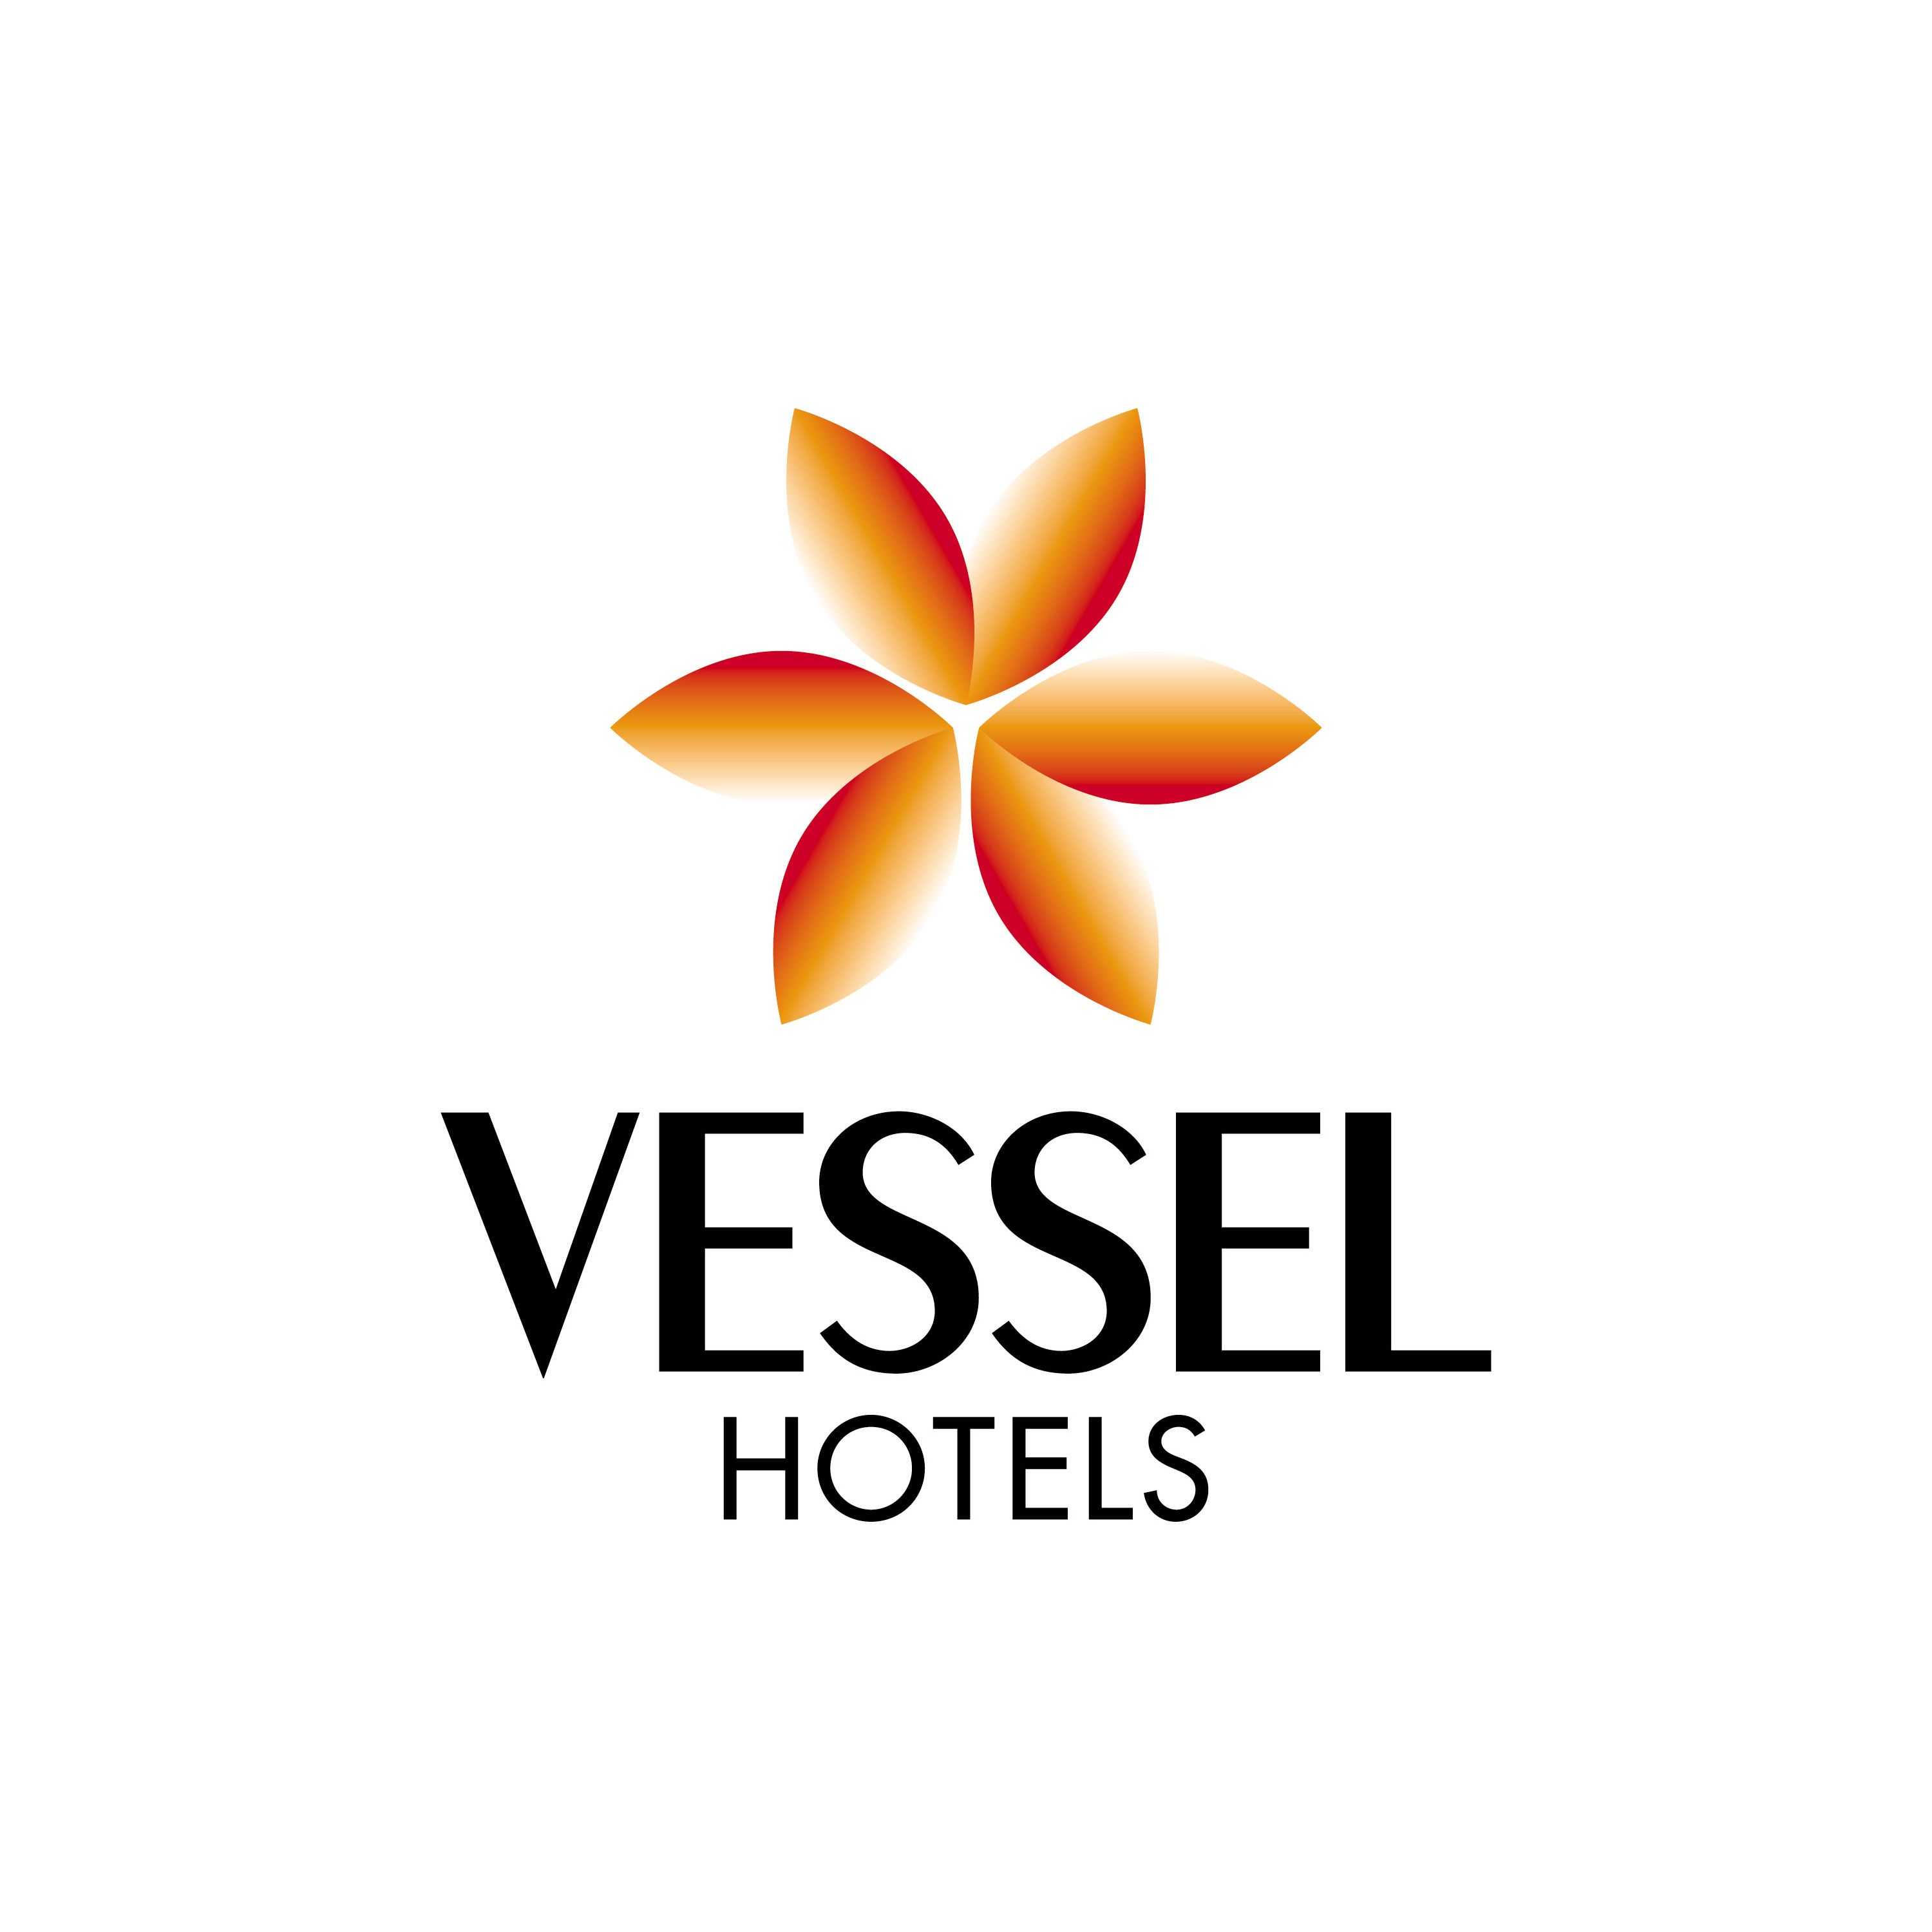 VESSEL HOTELS